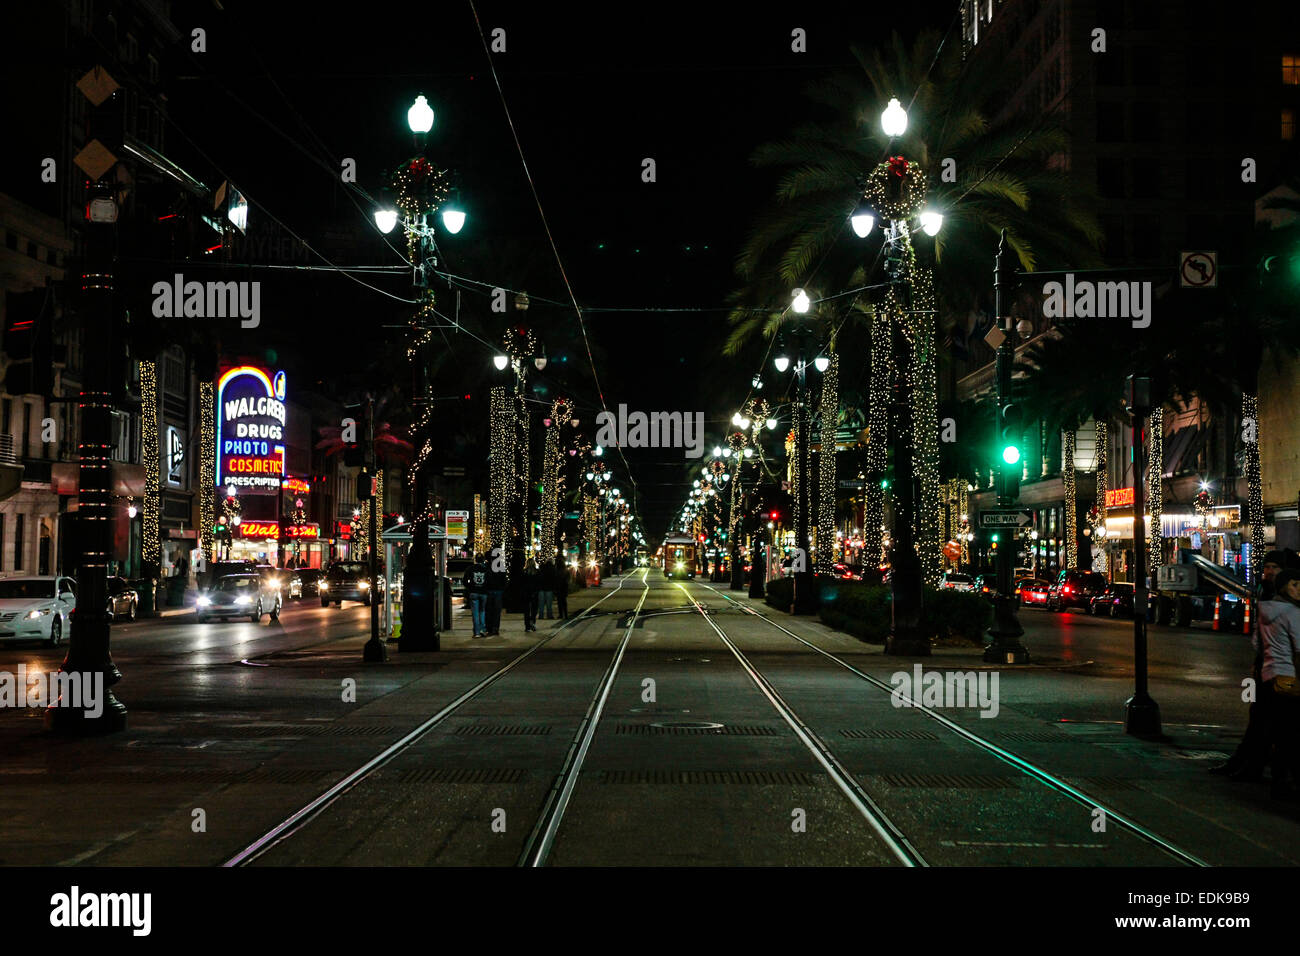 Canal Street, New Orleans, Louisiana Stock Photo - Alamy